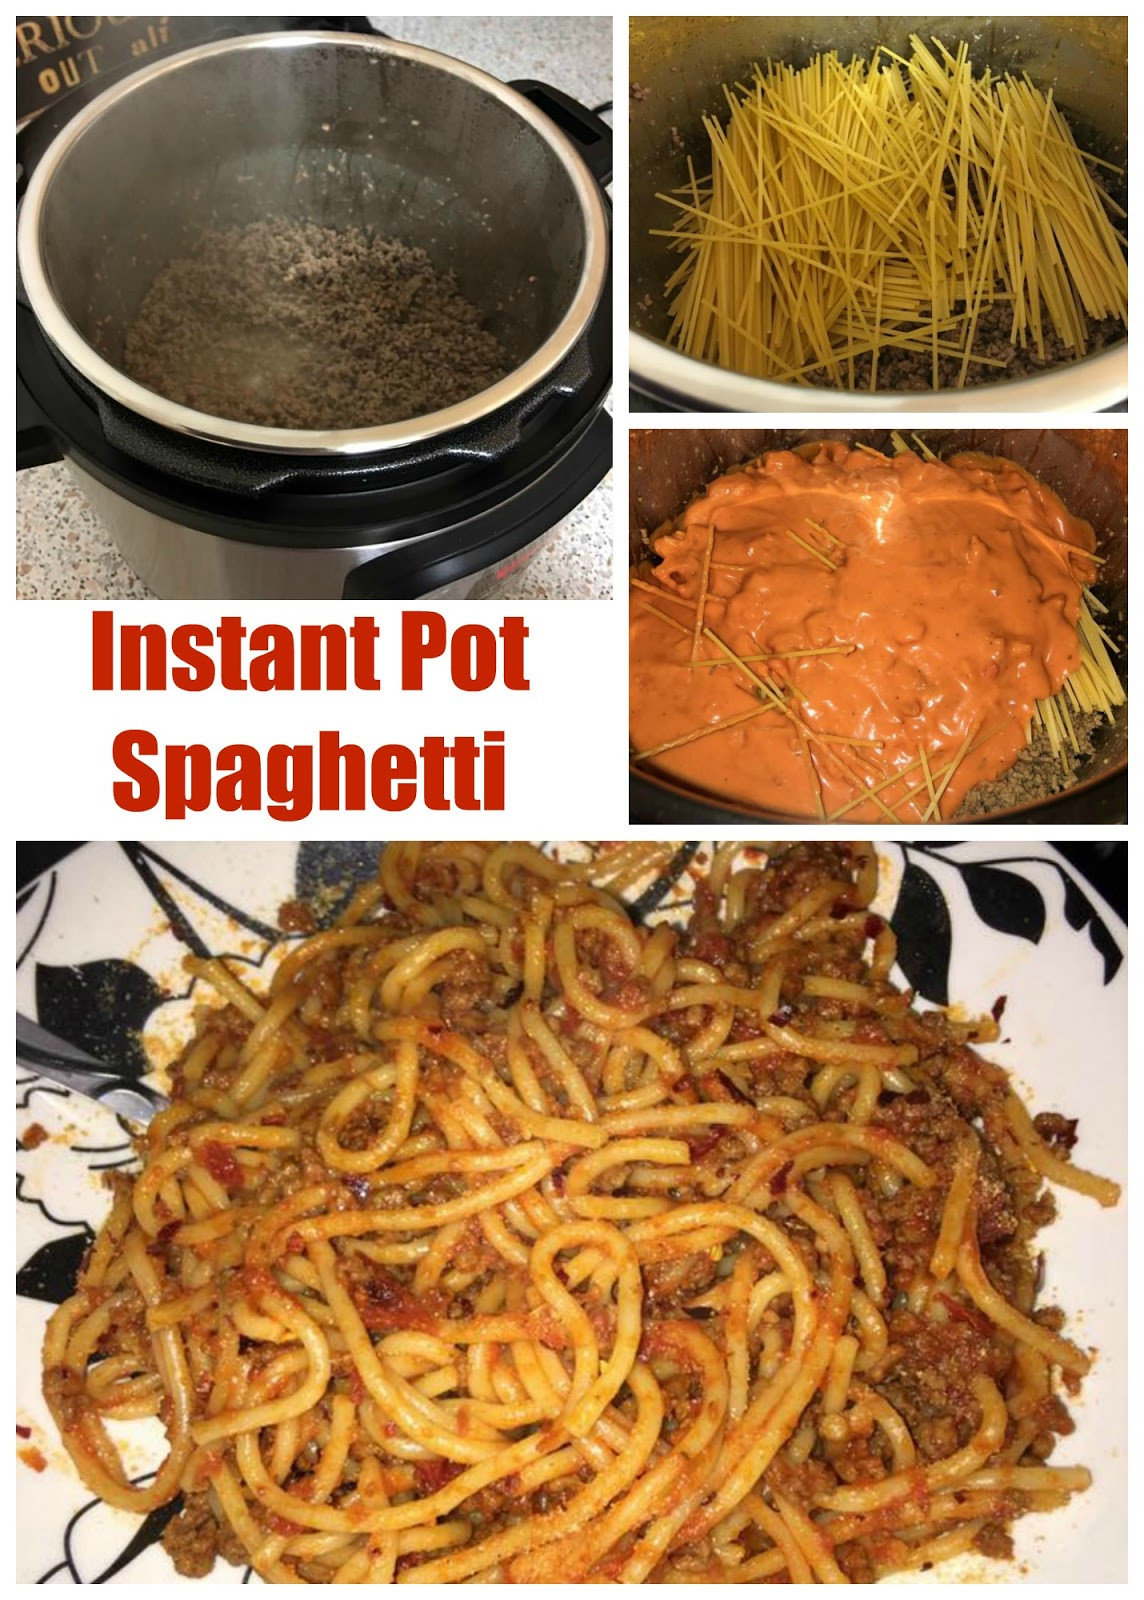 Instant Pot Spaghetti Noodles
 Reviews Chews & How Tos Instant Pot Spaghetti